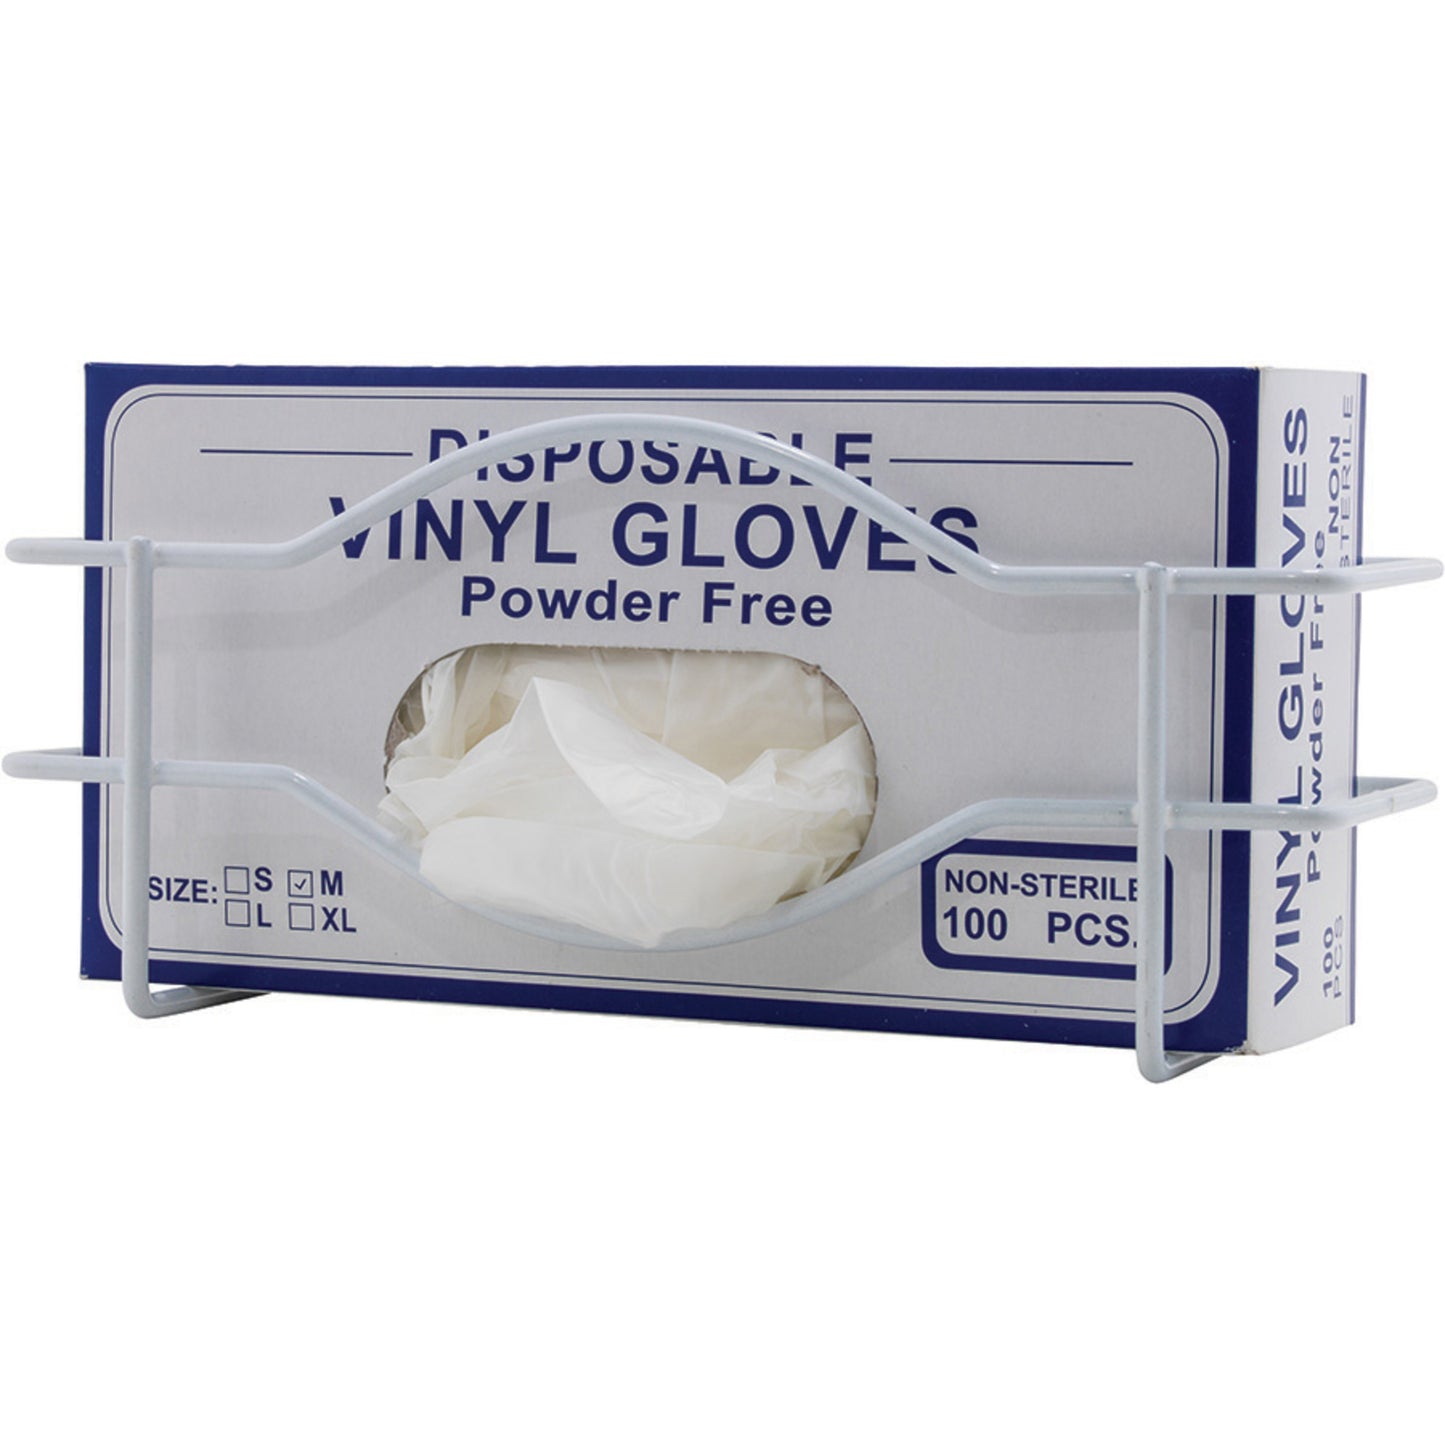 Glove Box Holder Fits 9-3/4" x 2-7/8" Box